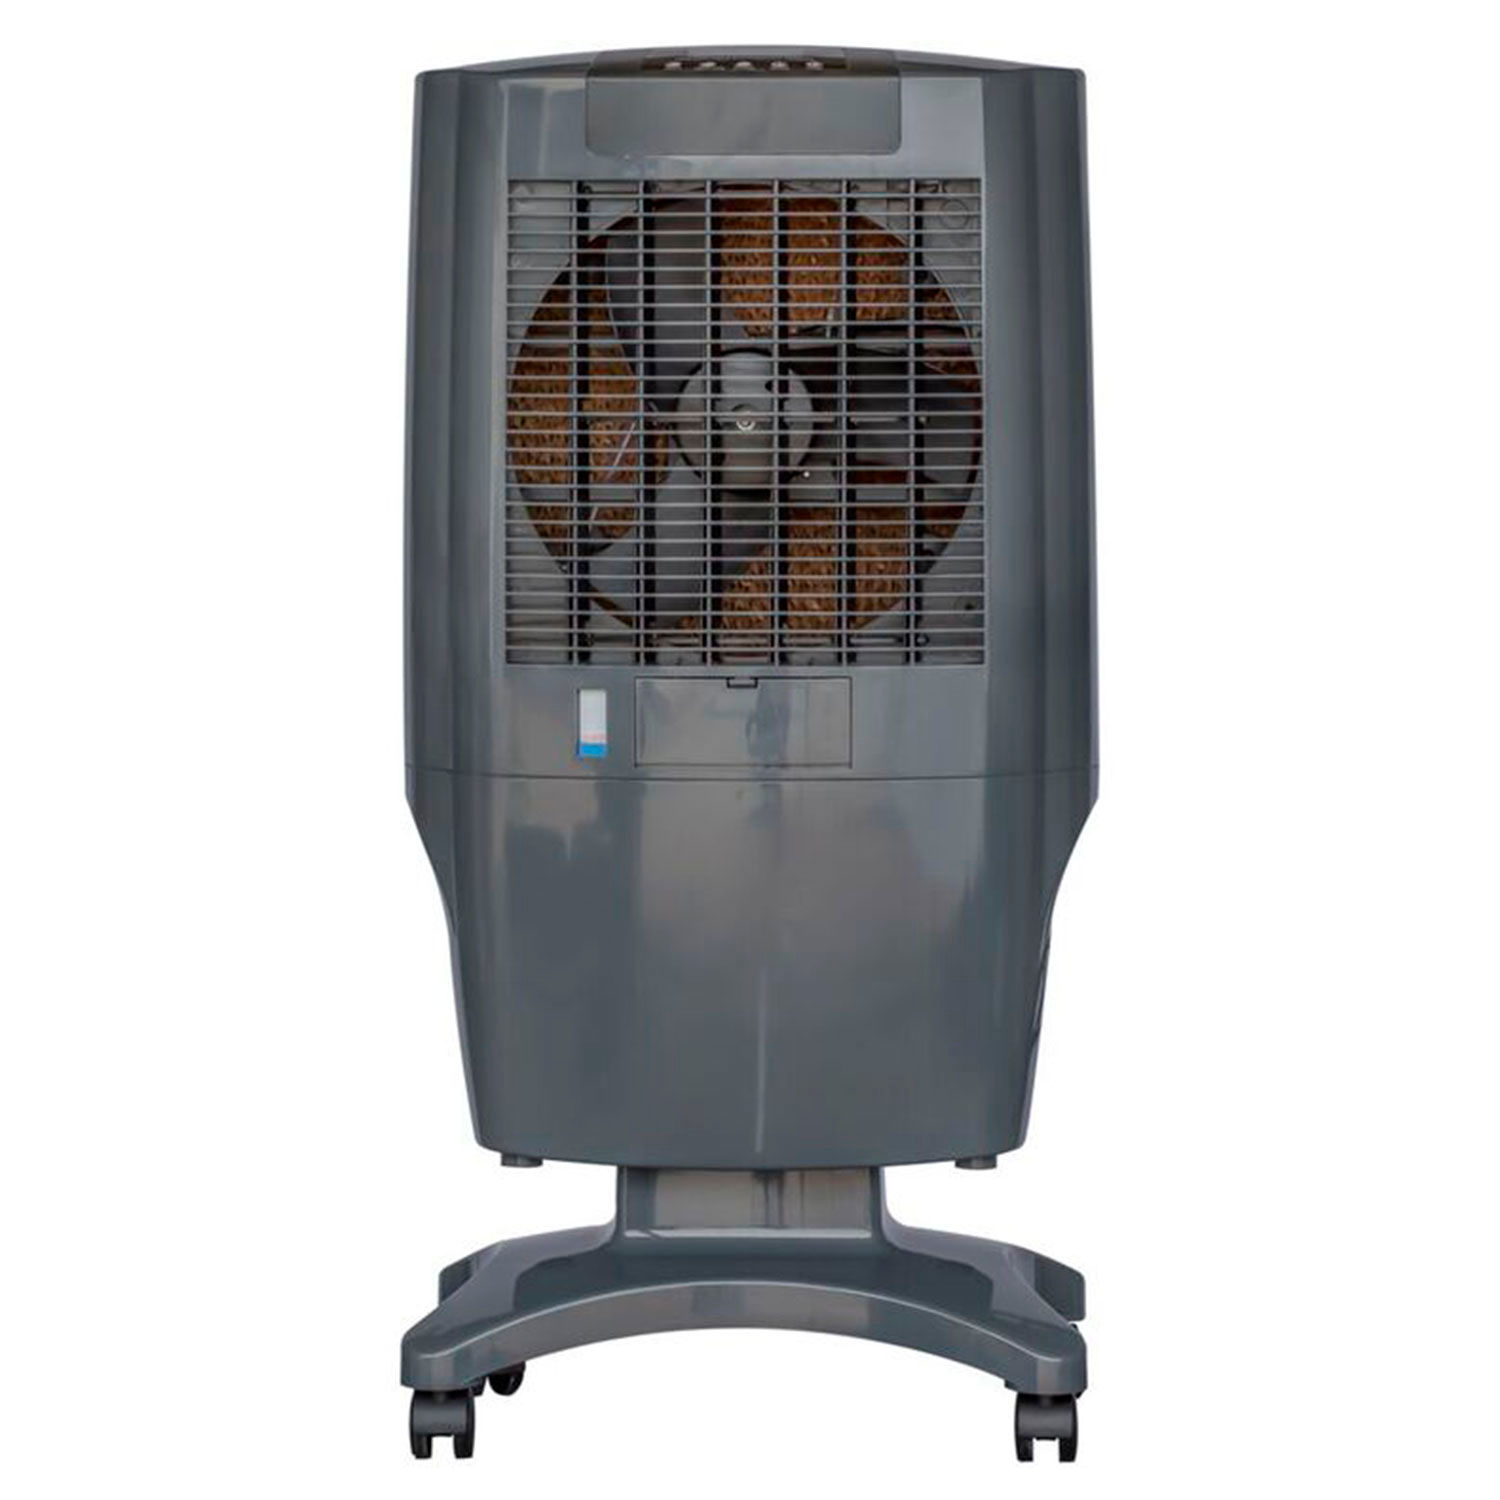 champion cp70 ultracool evaporative cooler